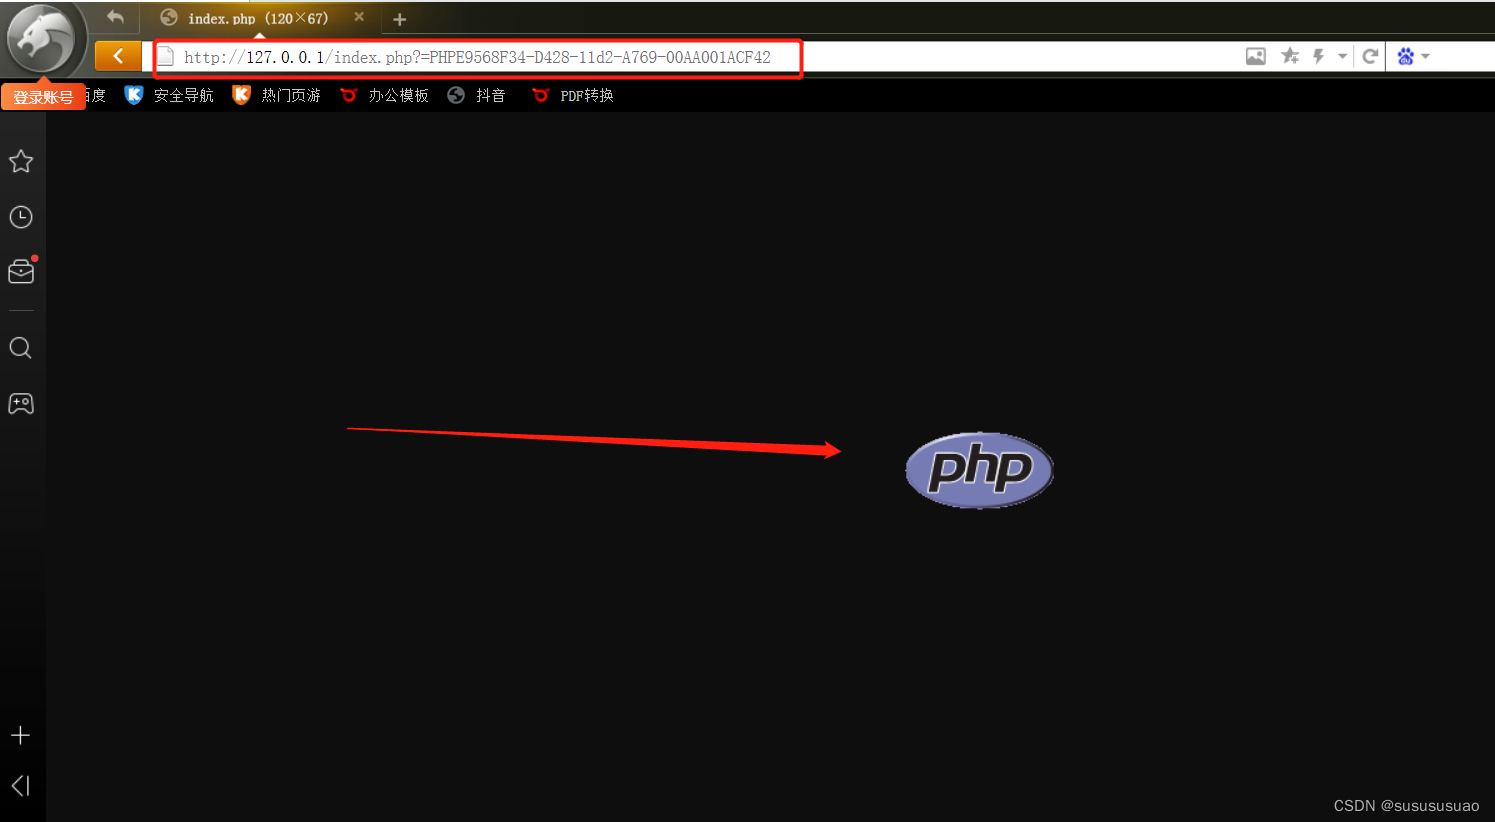 《web服务器PHP复活节彩蛋信息泄露漏洞》_web_server php easteregg informationdisclosure